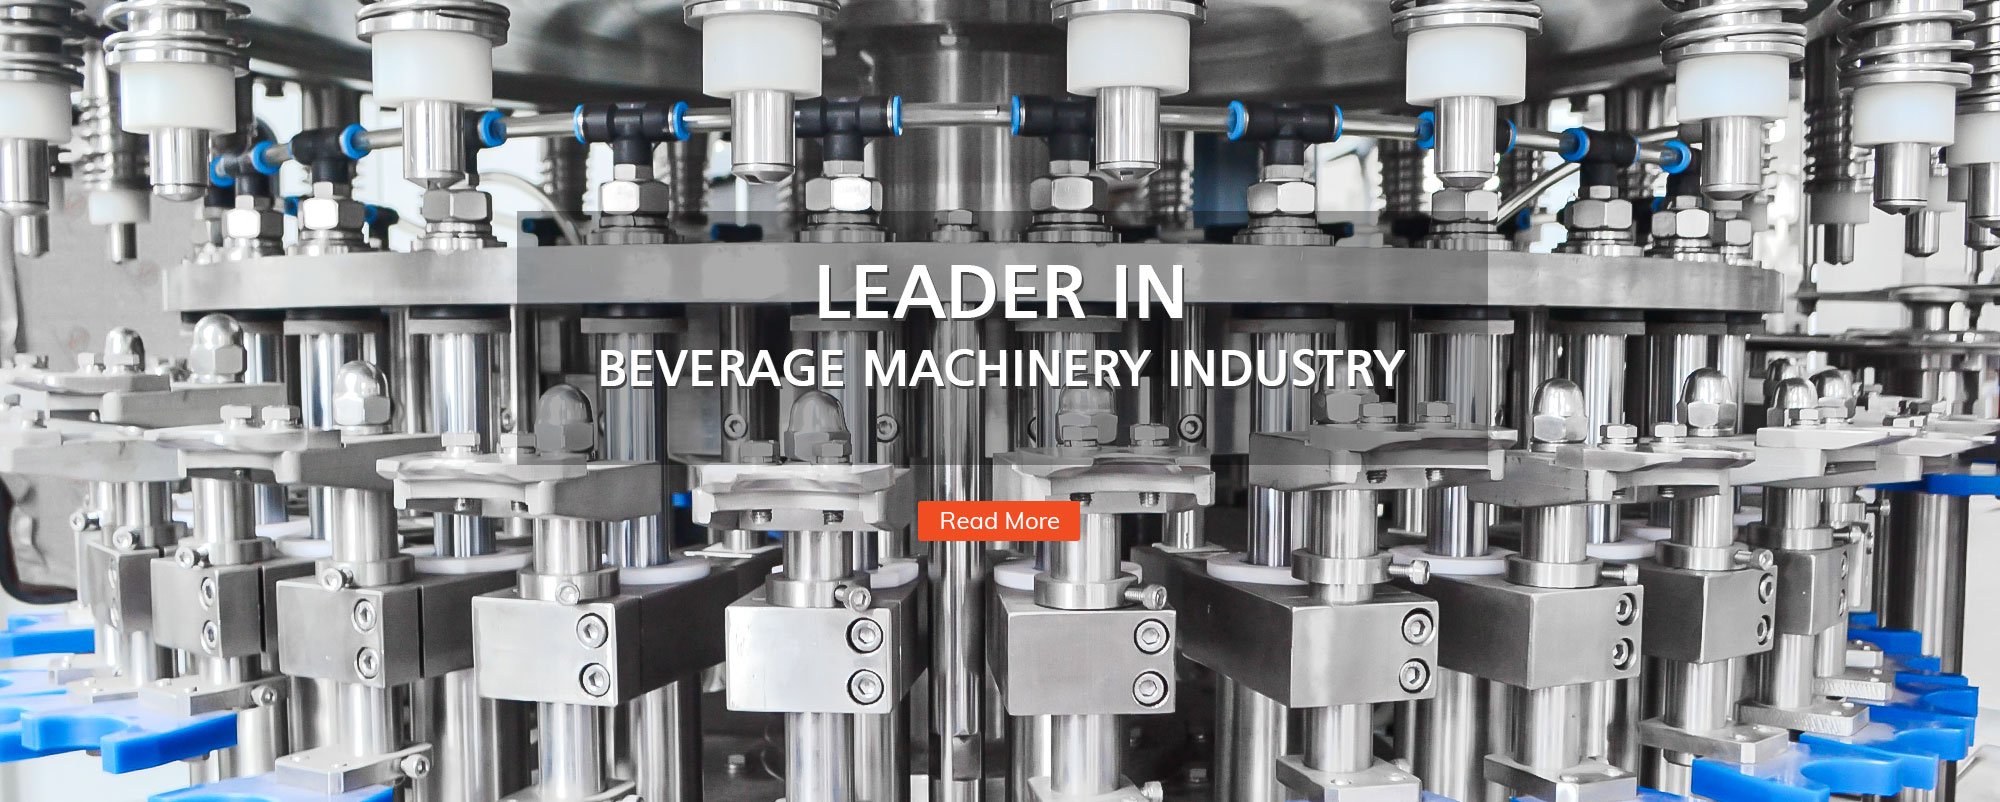 Leader in Beverage Machinery Industry